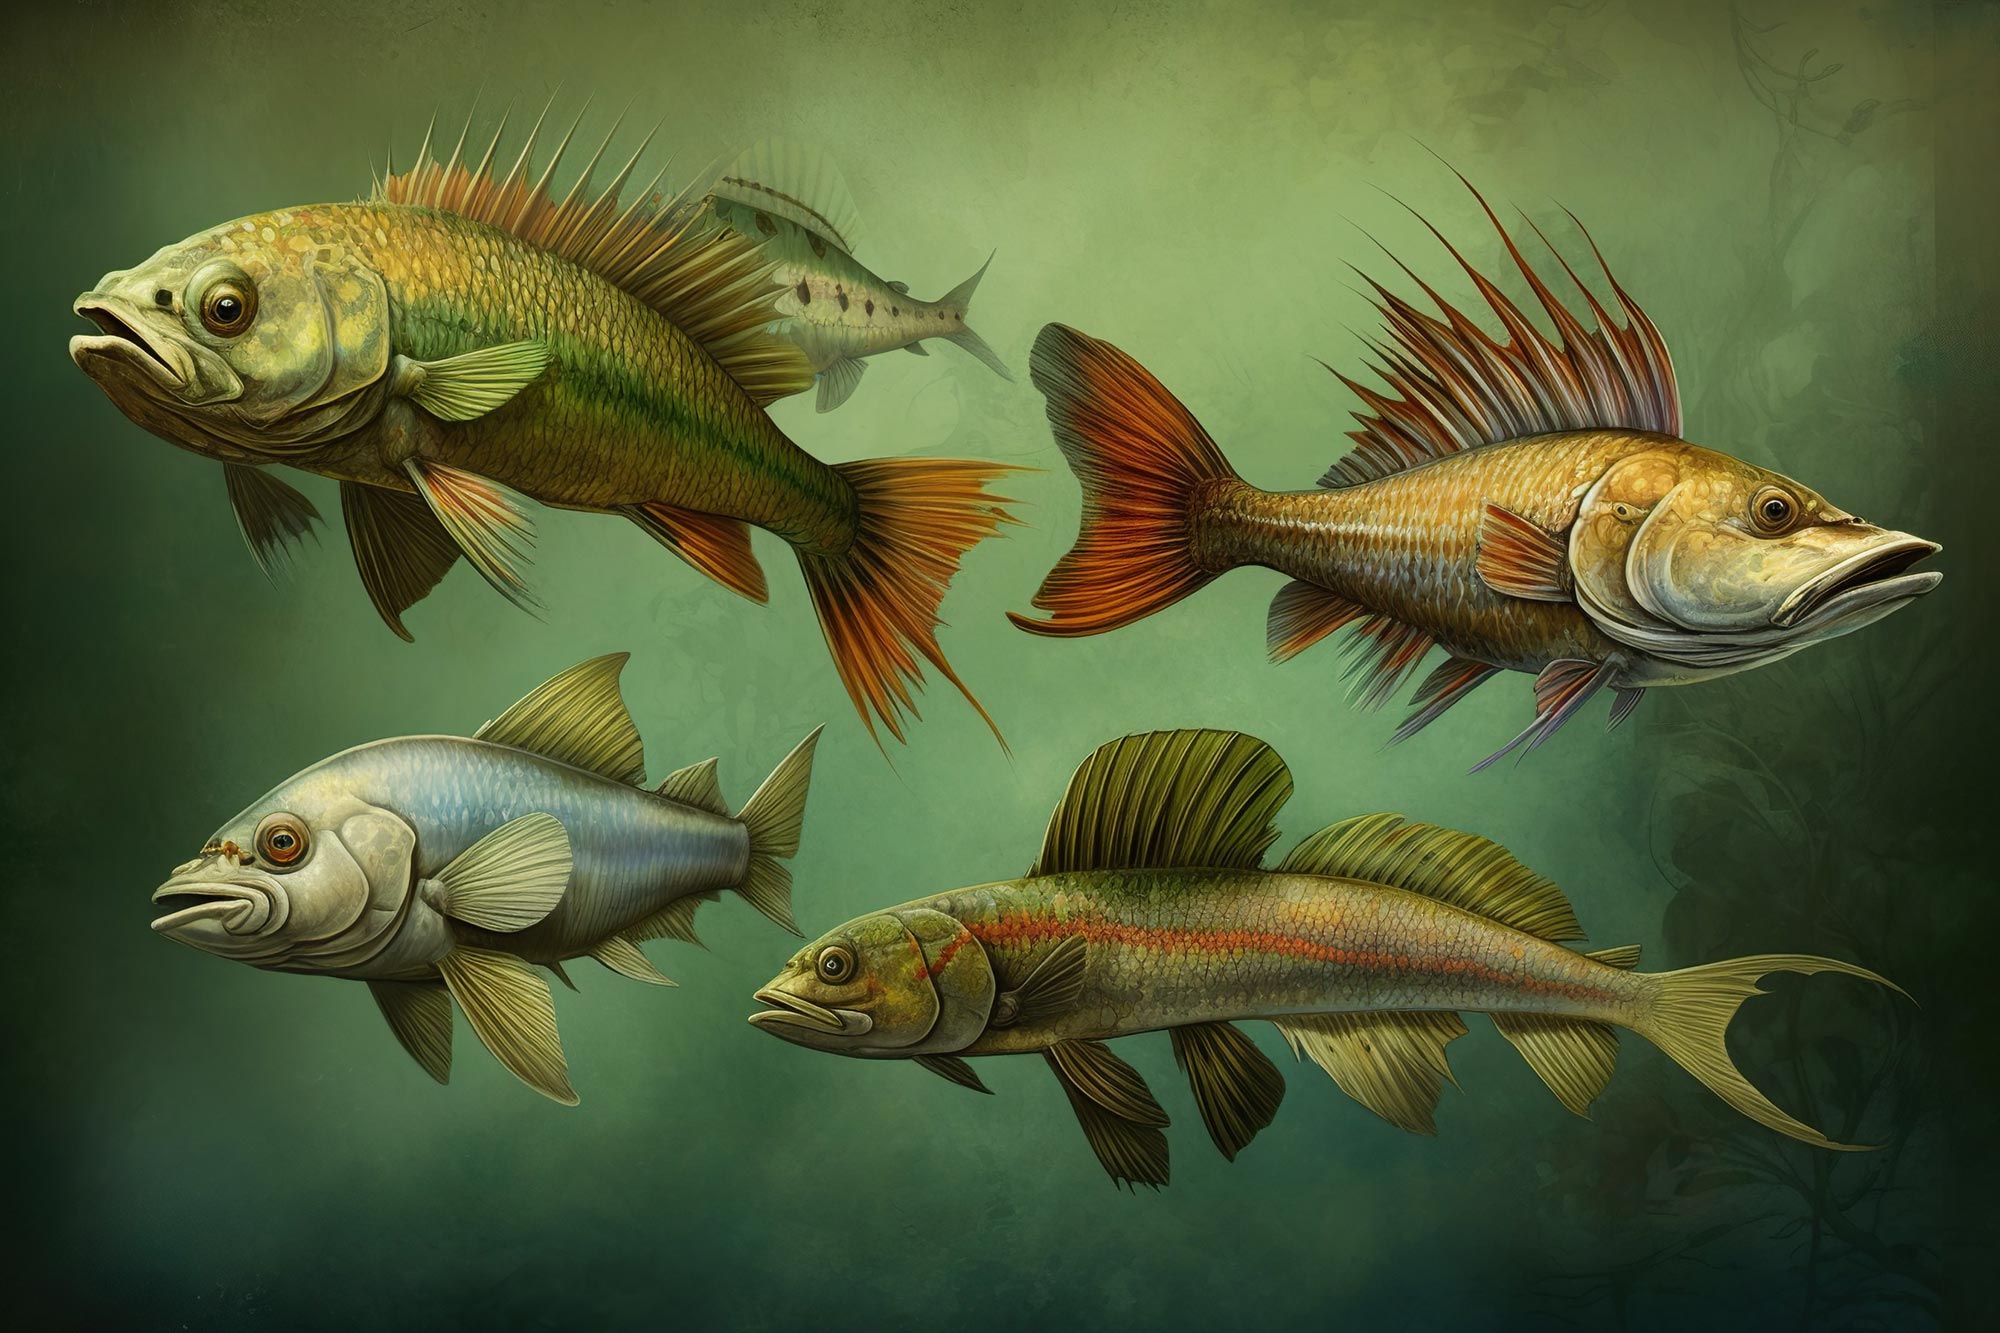 Fishing Evolution